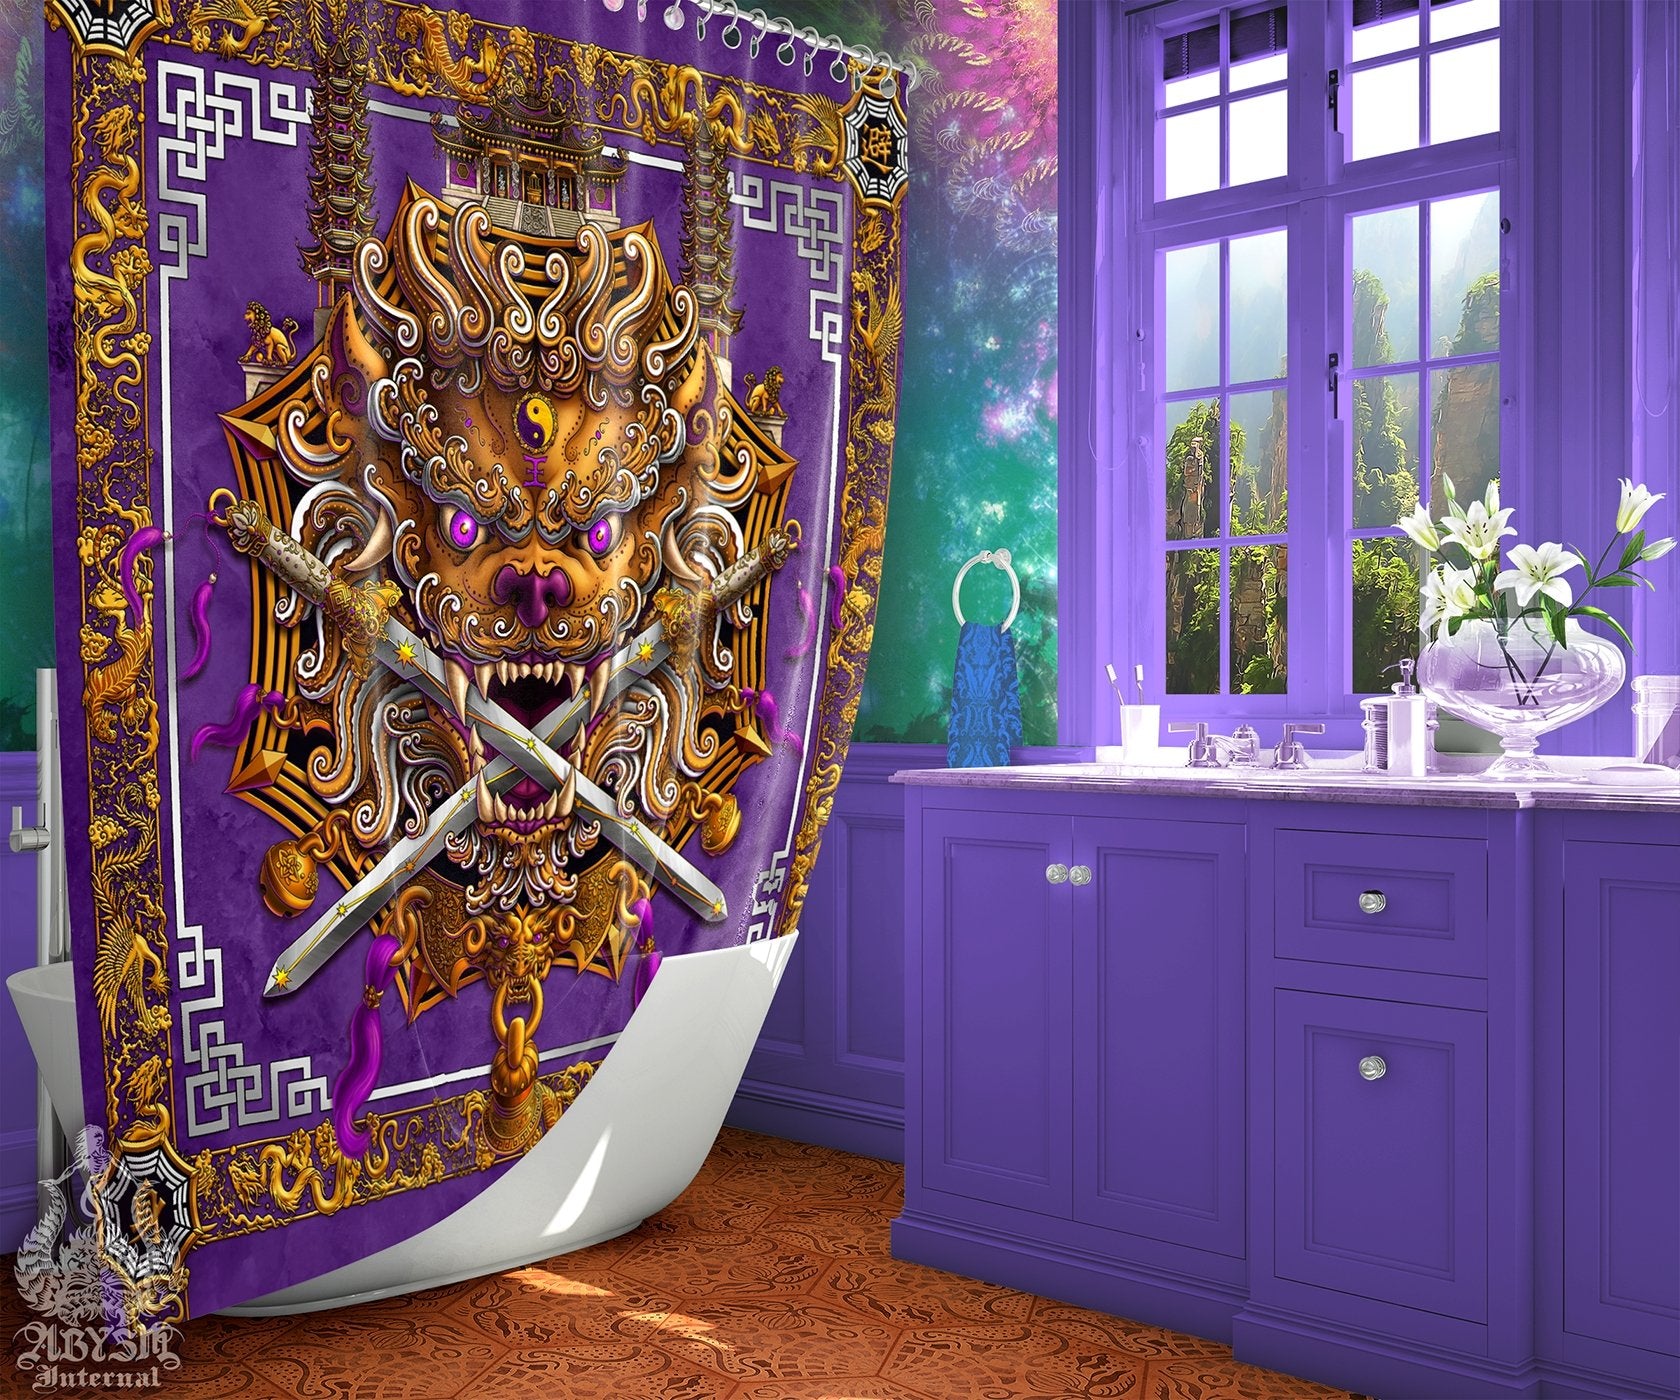 Lion Shower Curtain, 71x74 inches, Taiwan Sword Lion, Chinese Bathroom,  Alternative Fantasy Decor, Asian Mythology - Purple and White